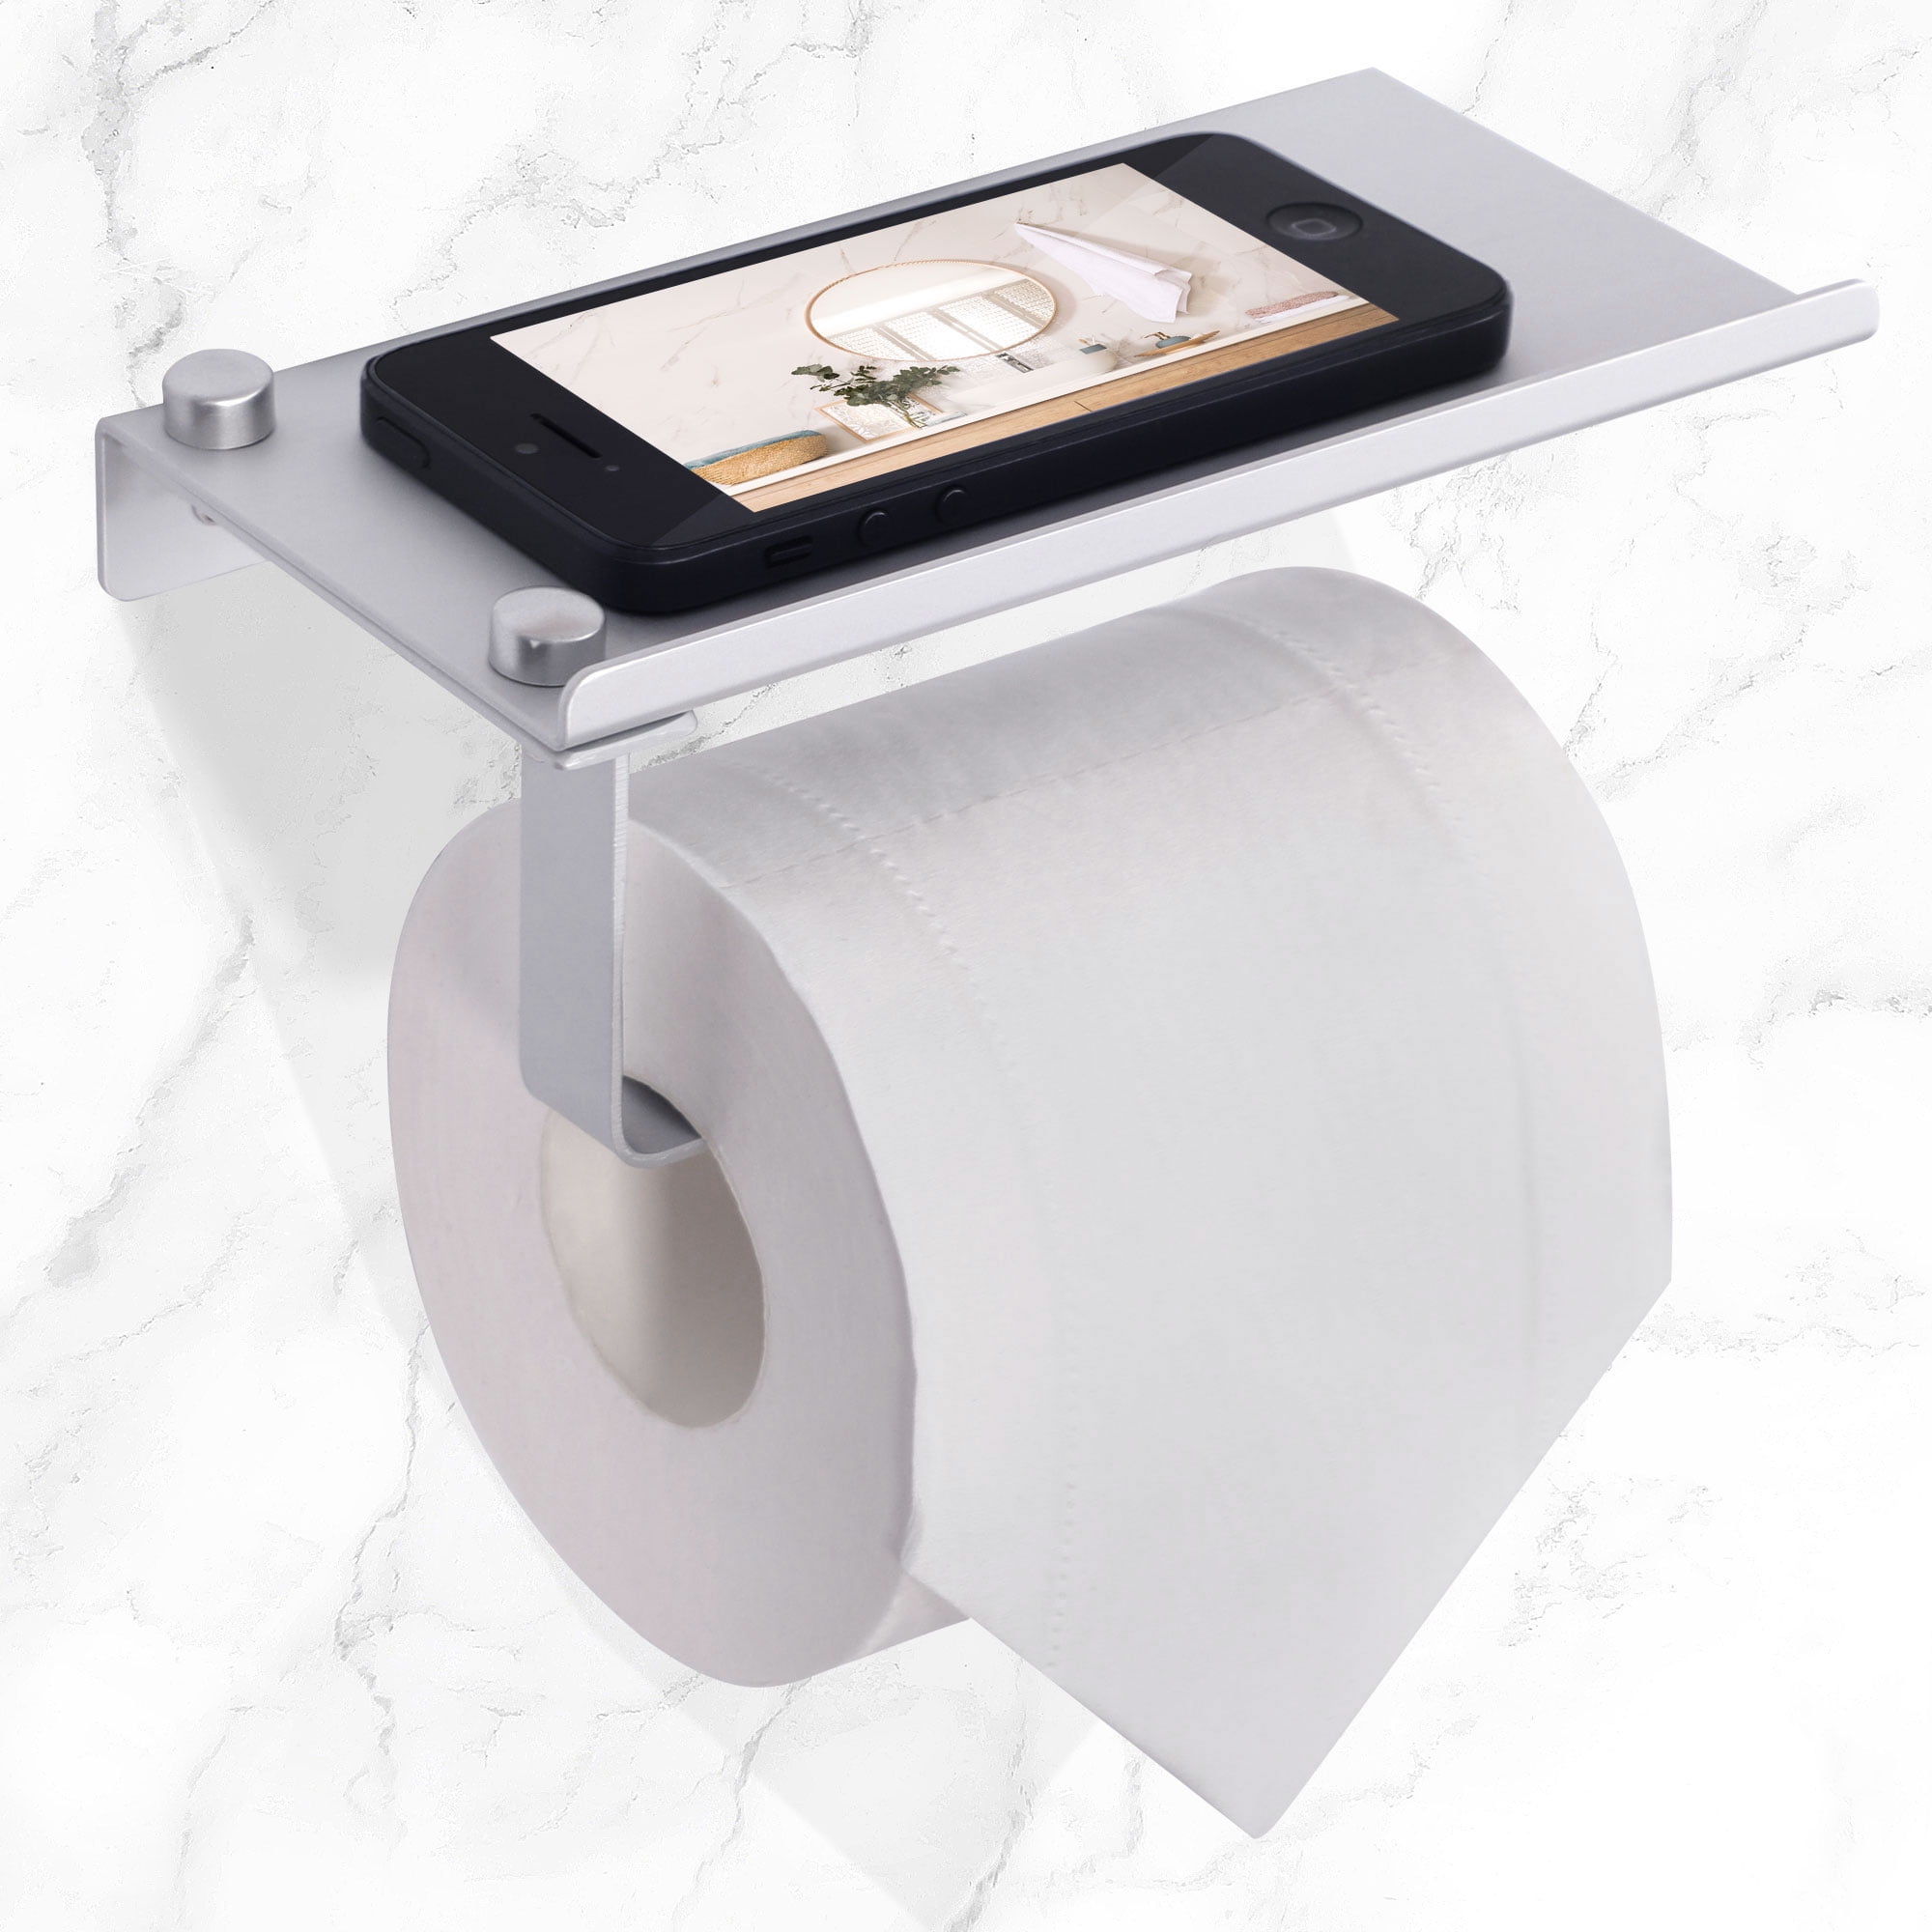 Details about   Bathroom Toilet Roll Paper Holder Wall Mount Phone Holder storage Shelf Rack. 